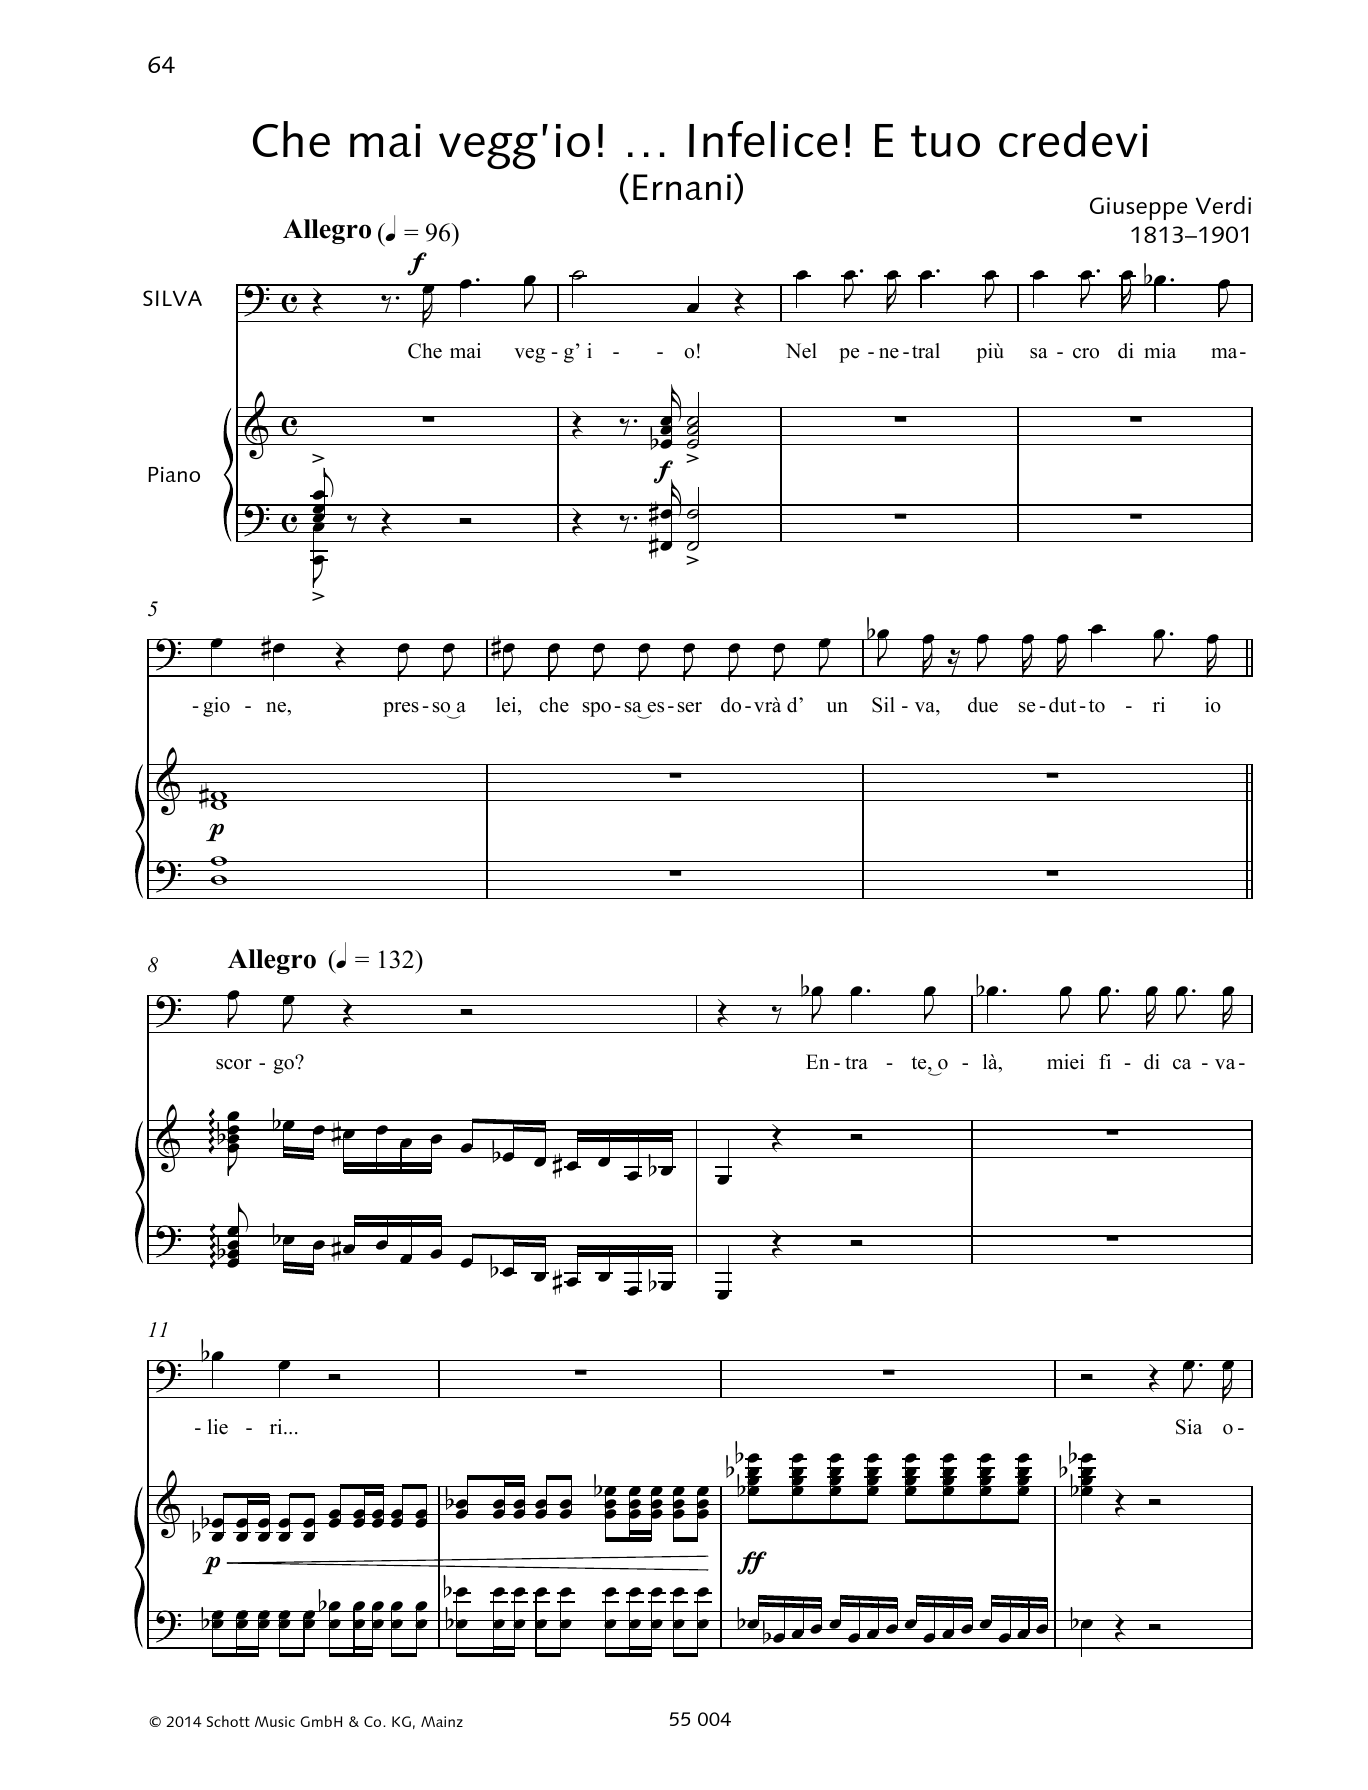 Giuseppe Verdi Che mai vegg'io!... Infelice! E tuo credevi sheet music notes and chords arranged for Piano & Vocal